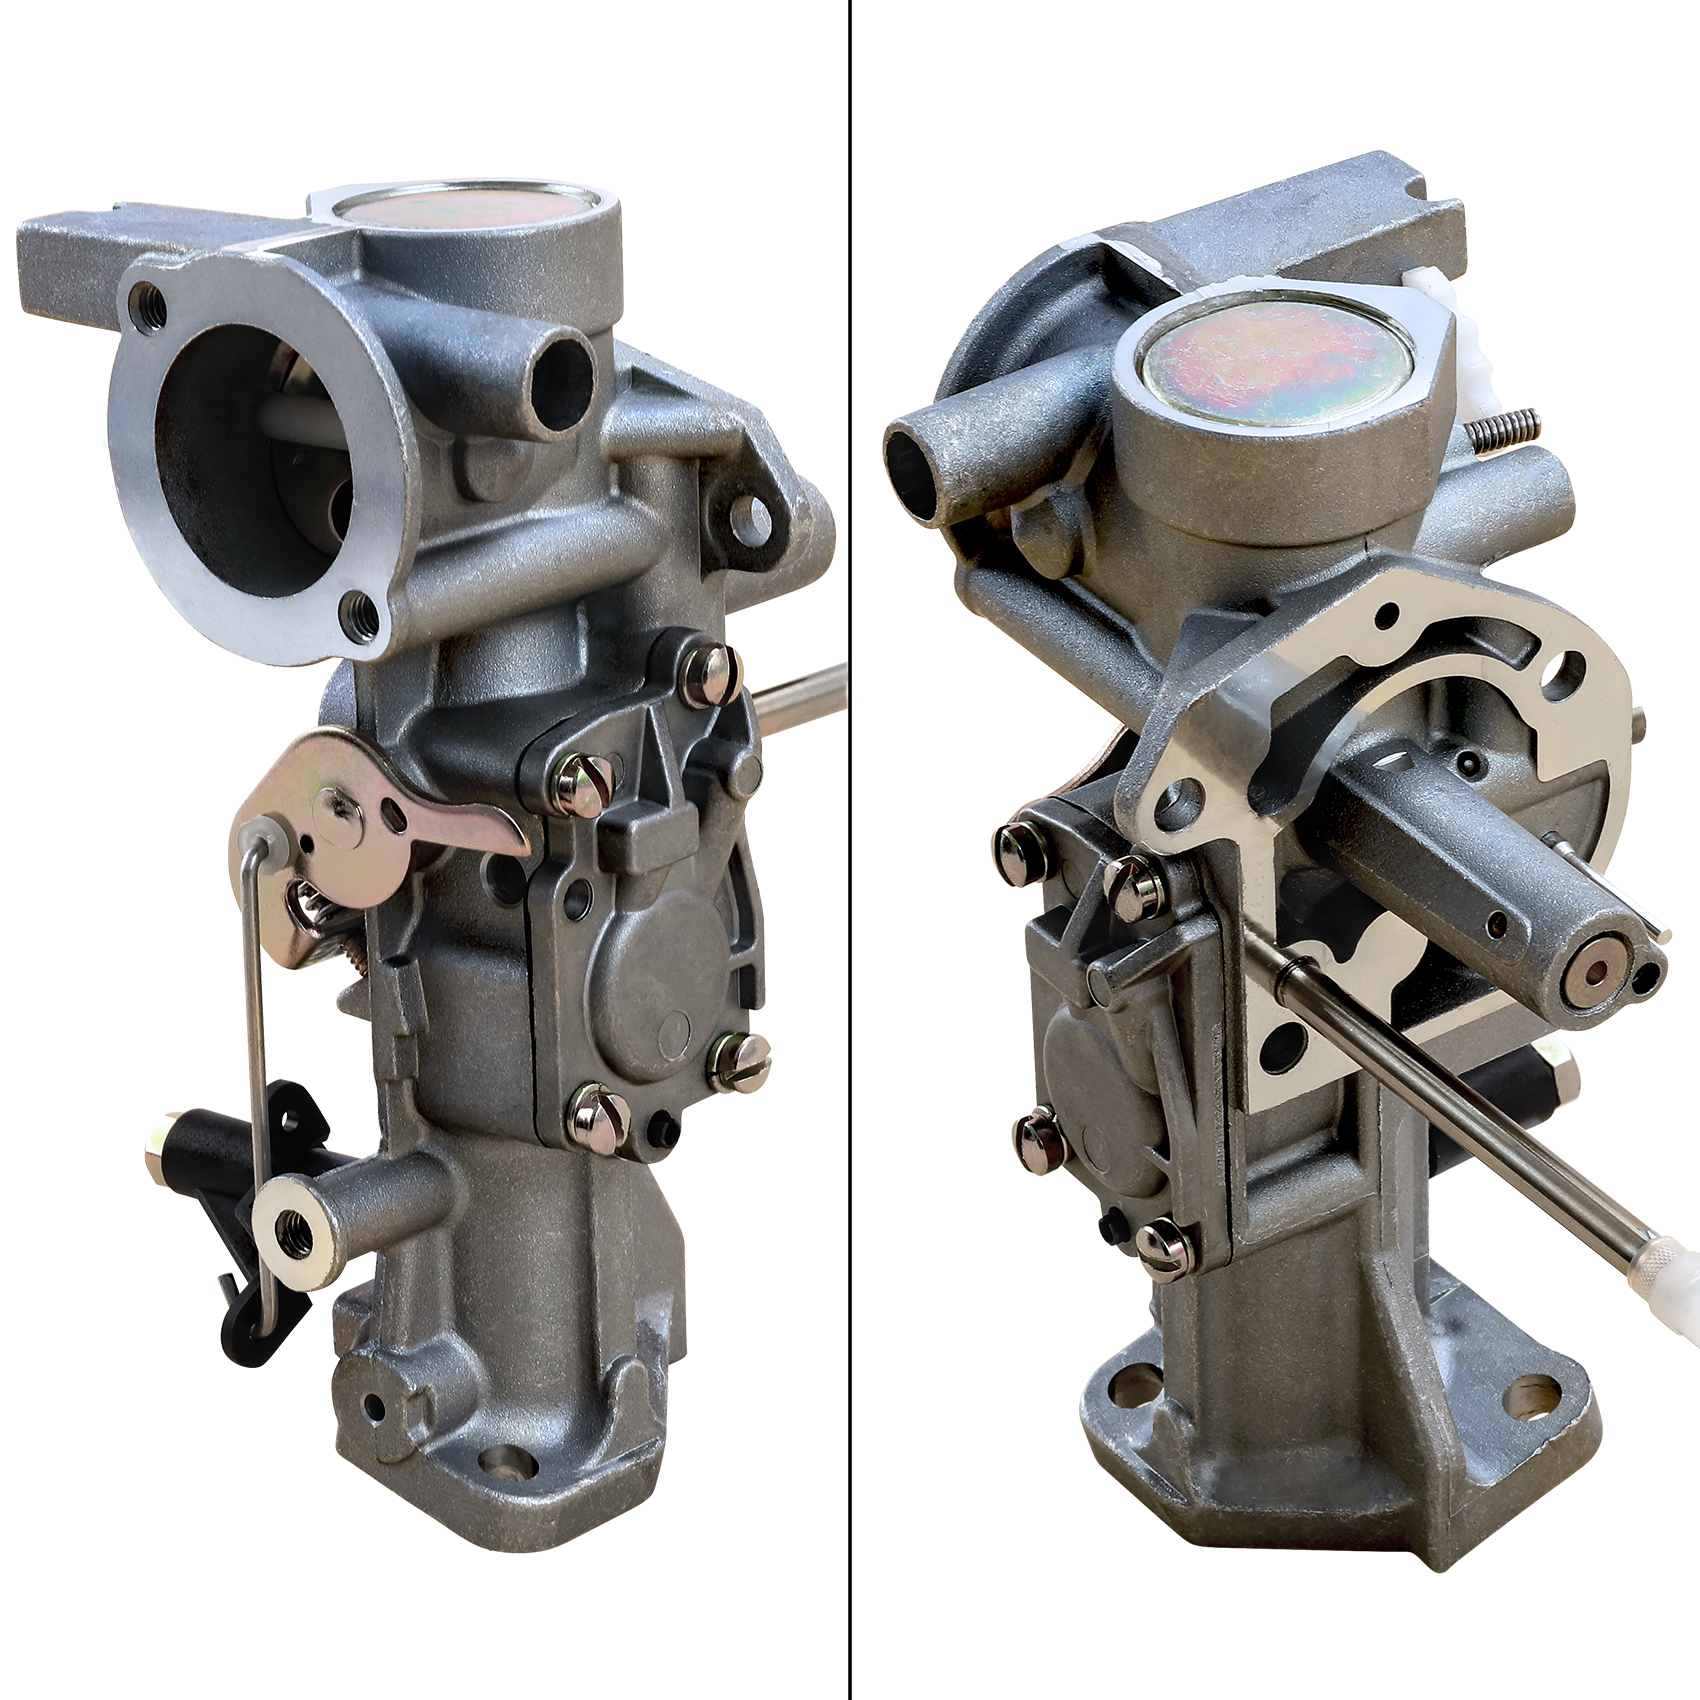 Carburetor fits for Briggs & Stratton 5HP Engine 498298 692784 495951  495426